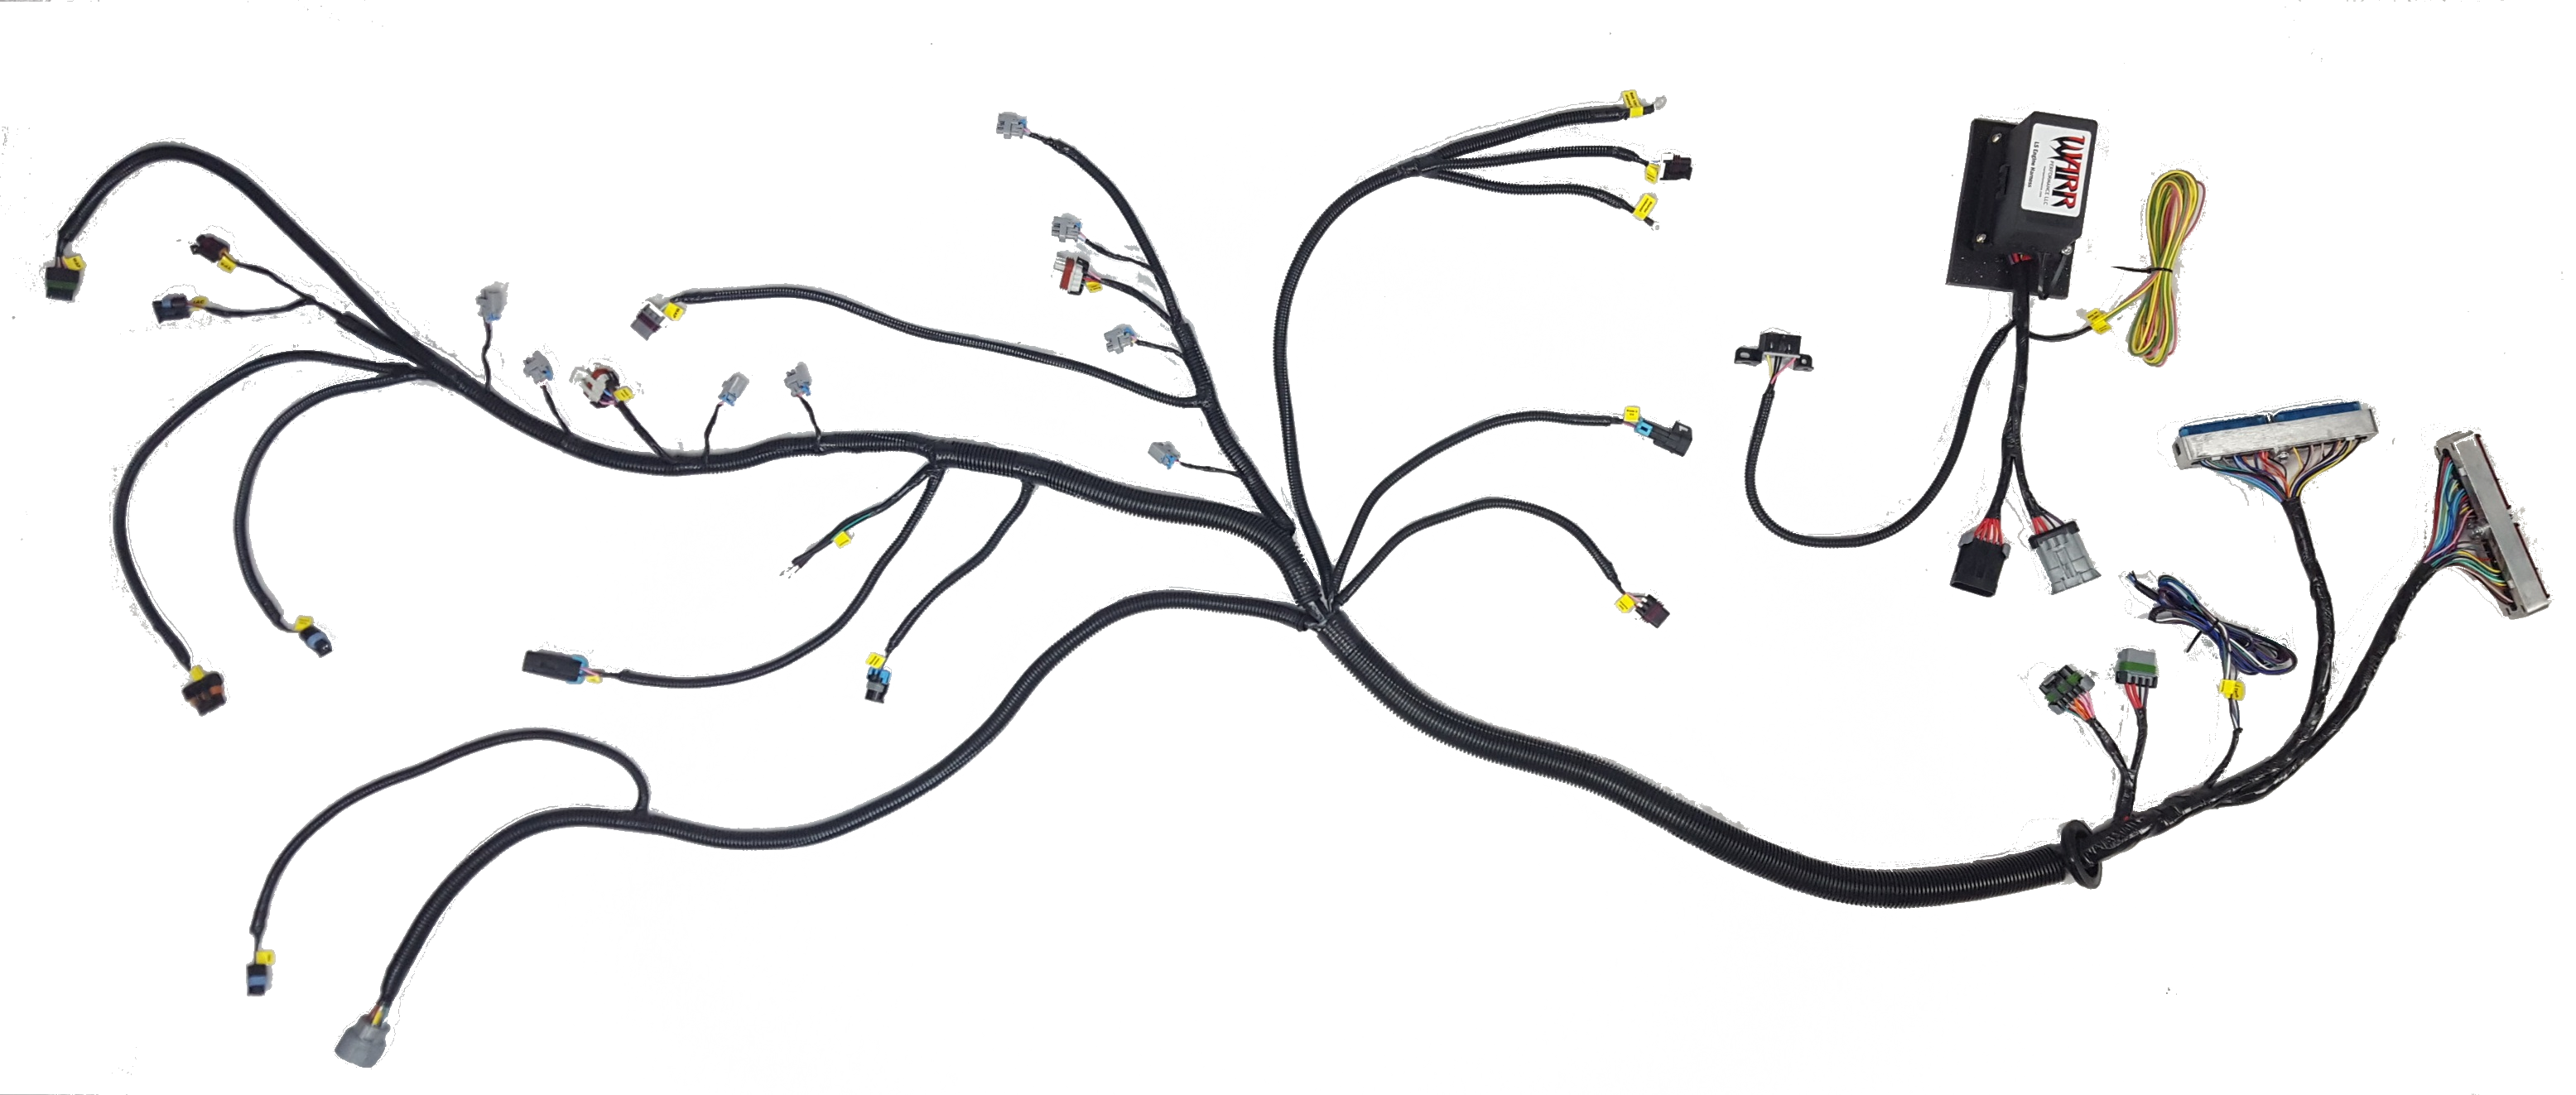 39 Ls Conversion Wiring Harness - Wiring Diagram Online Source